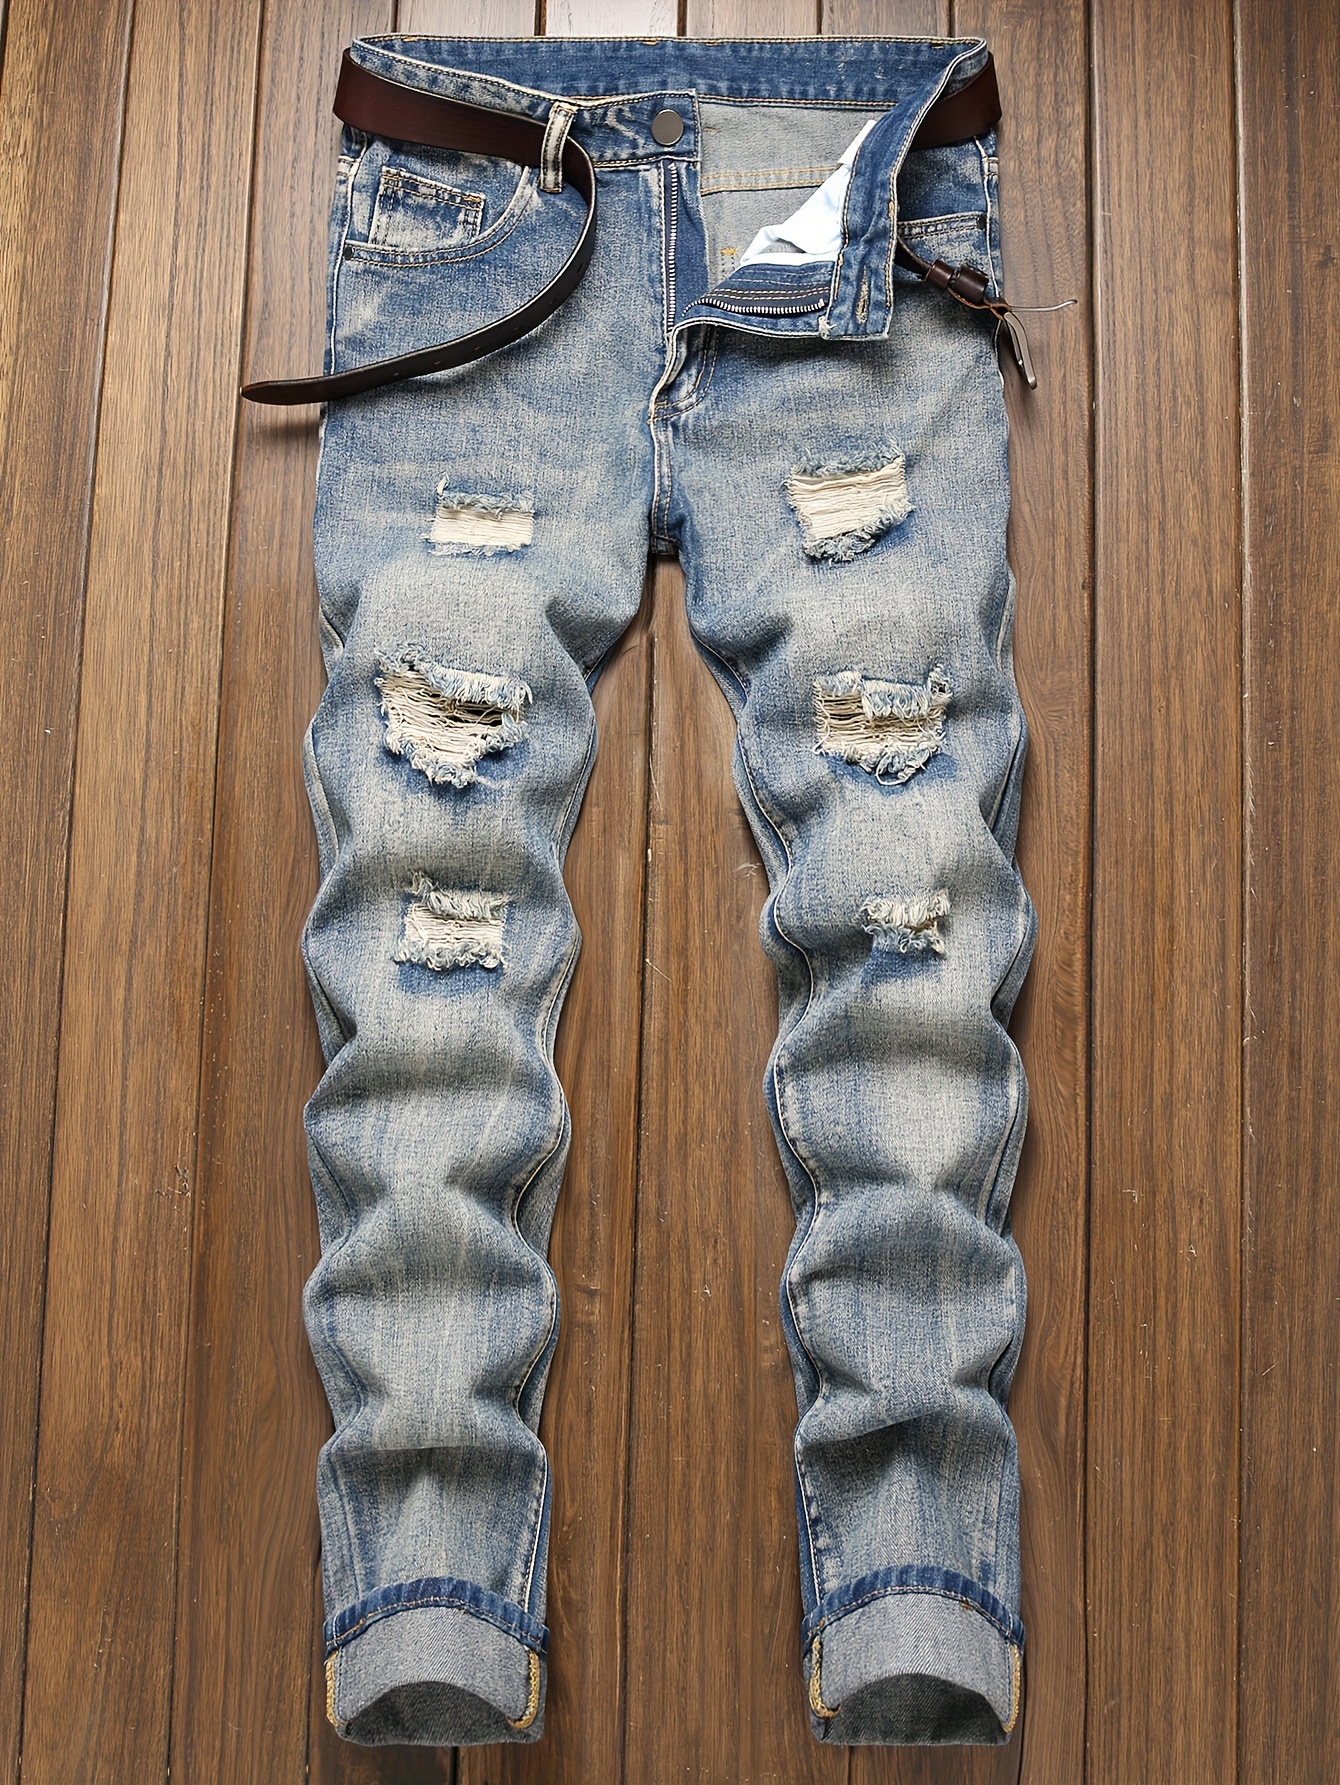 XFLWAM Men's Ripped Jeans Slim Fit Stretch Distressed Jeans Pants for Men  Light Blue XL